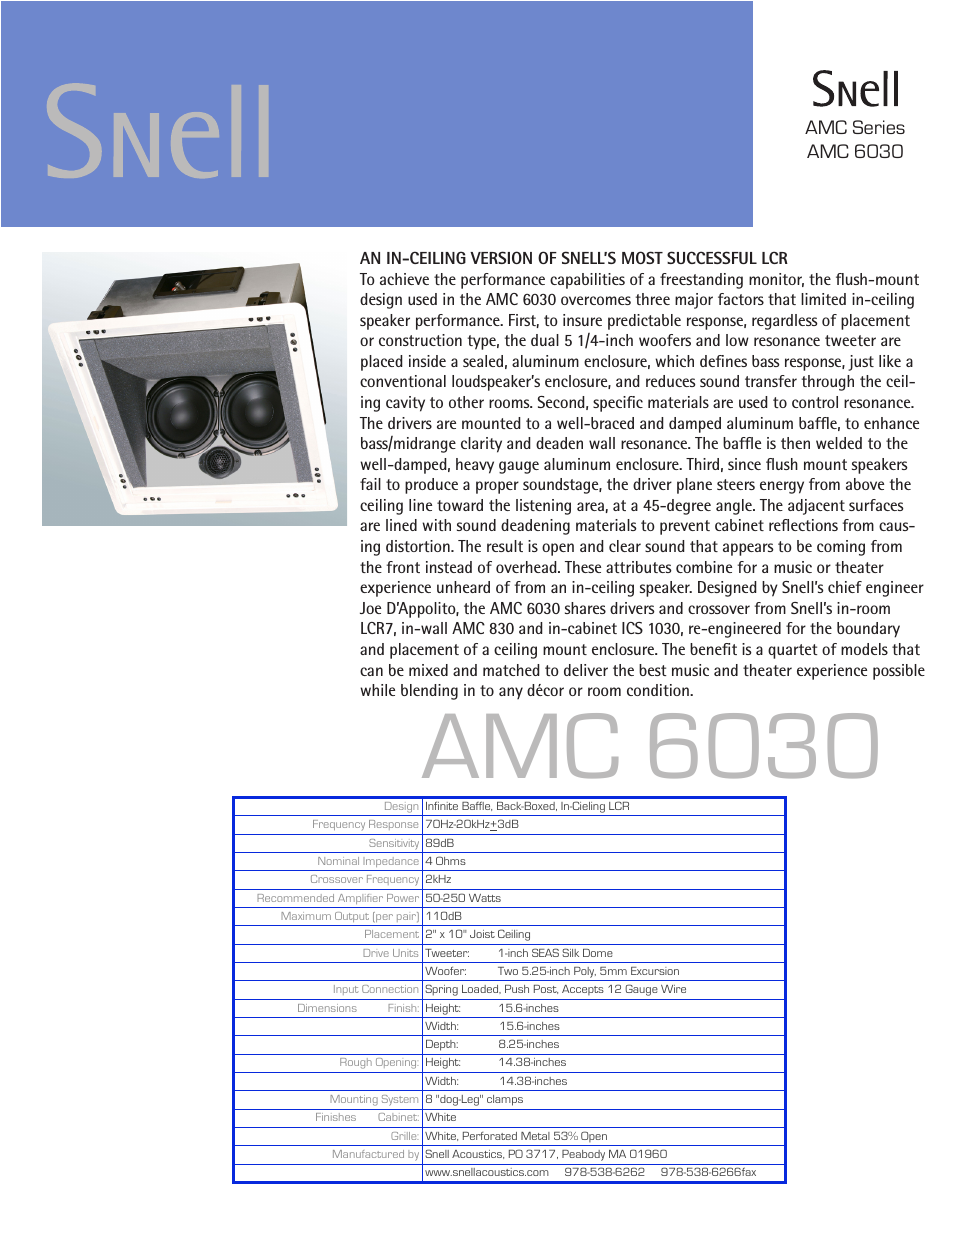 AMC 6030